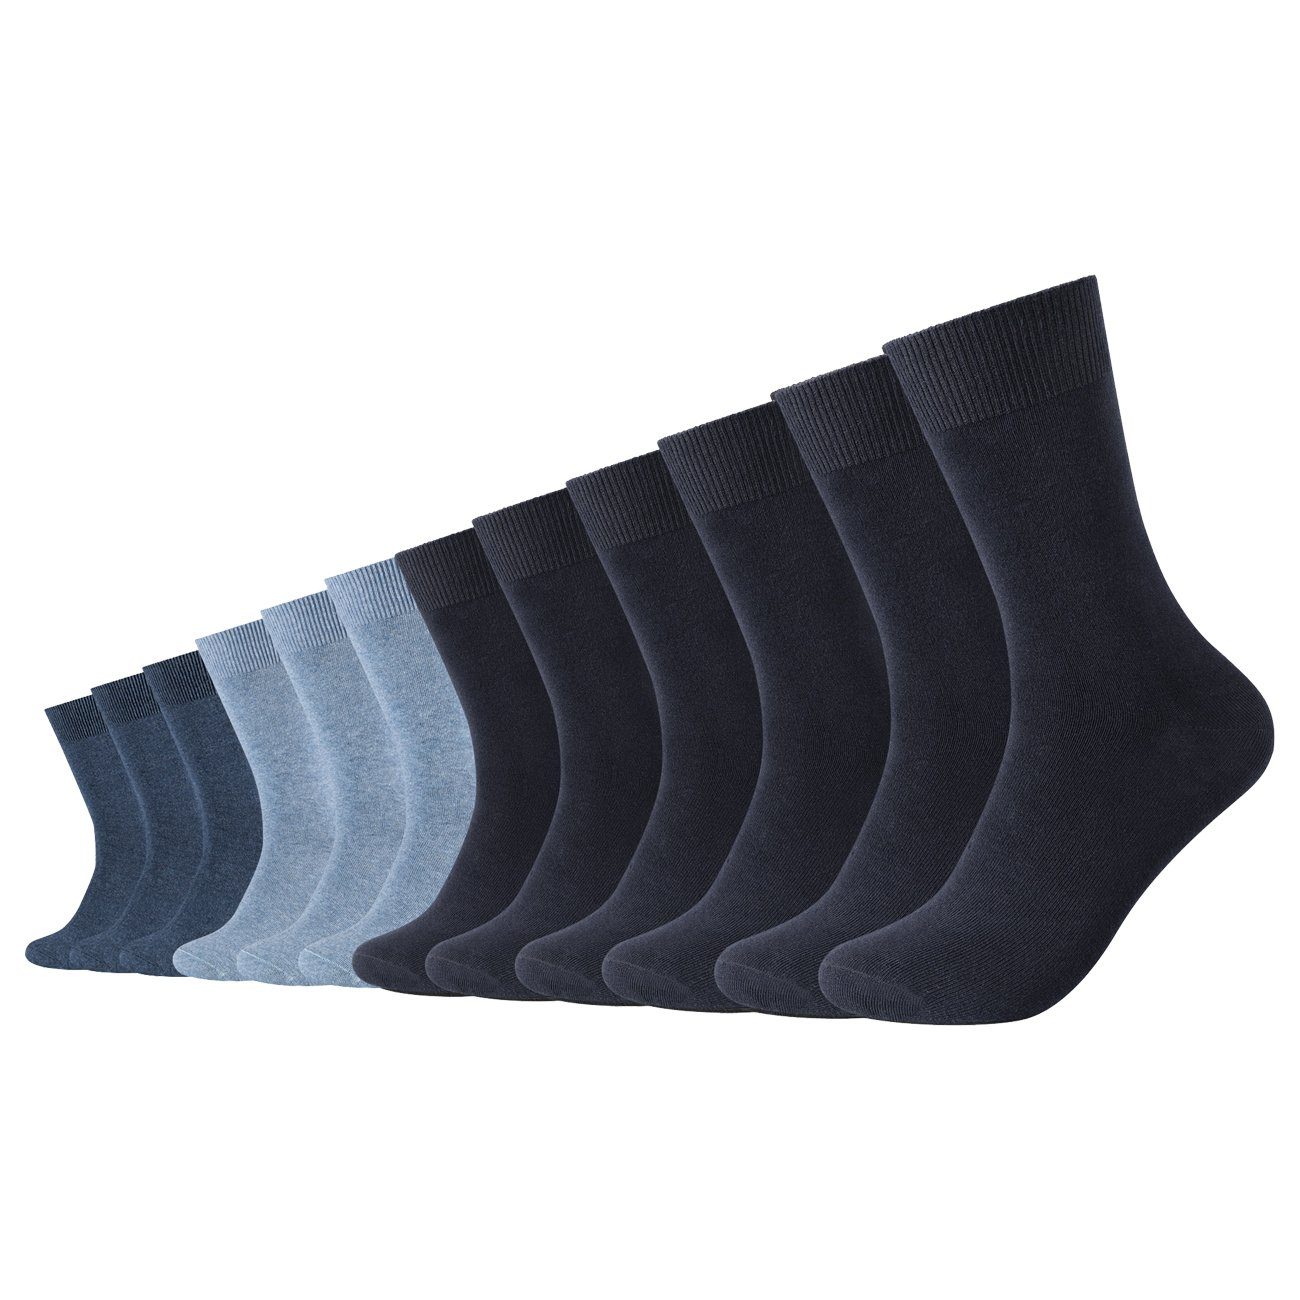 Camano Langsocken Unisex Socken Comfort Cotton Crew (12-Paar) Regularsocken aus pflegeleichter Baumwollmischung Navy Mix (5997)